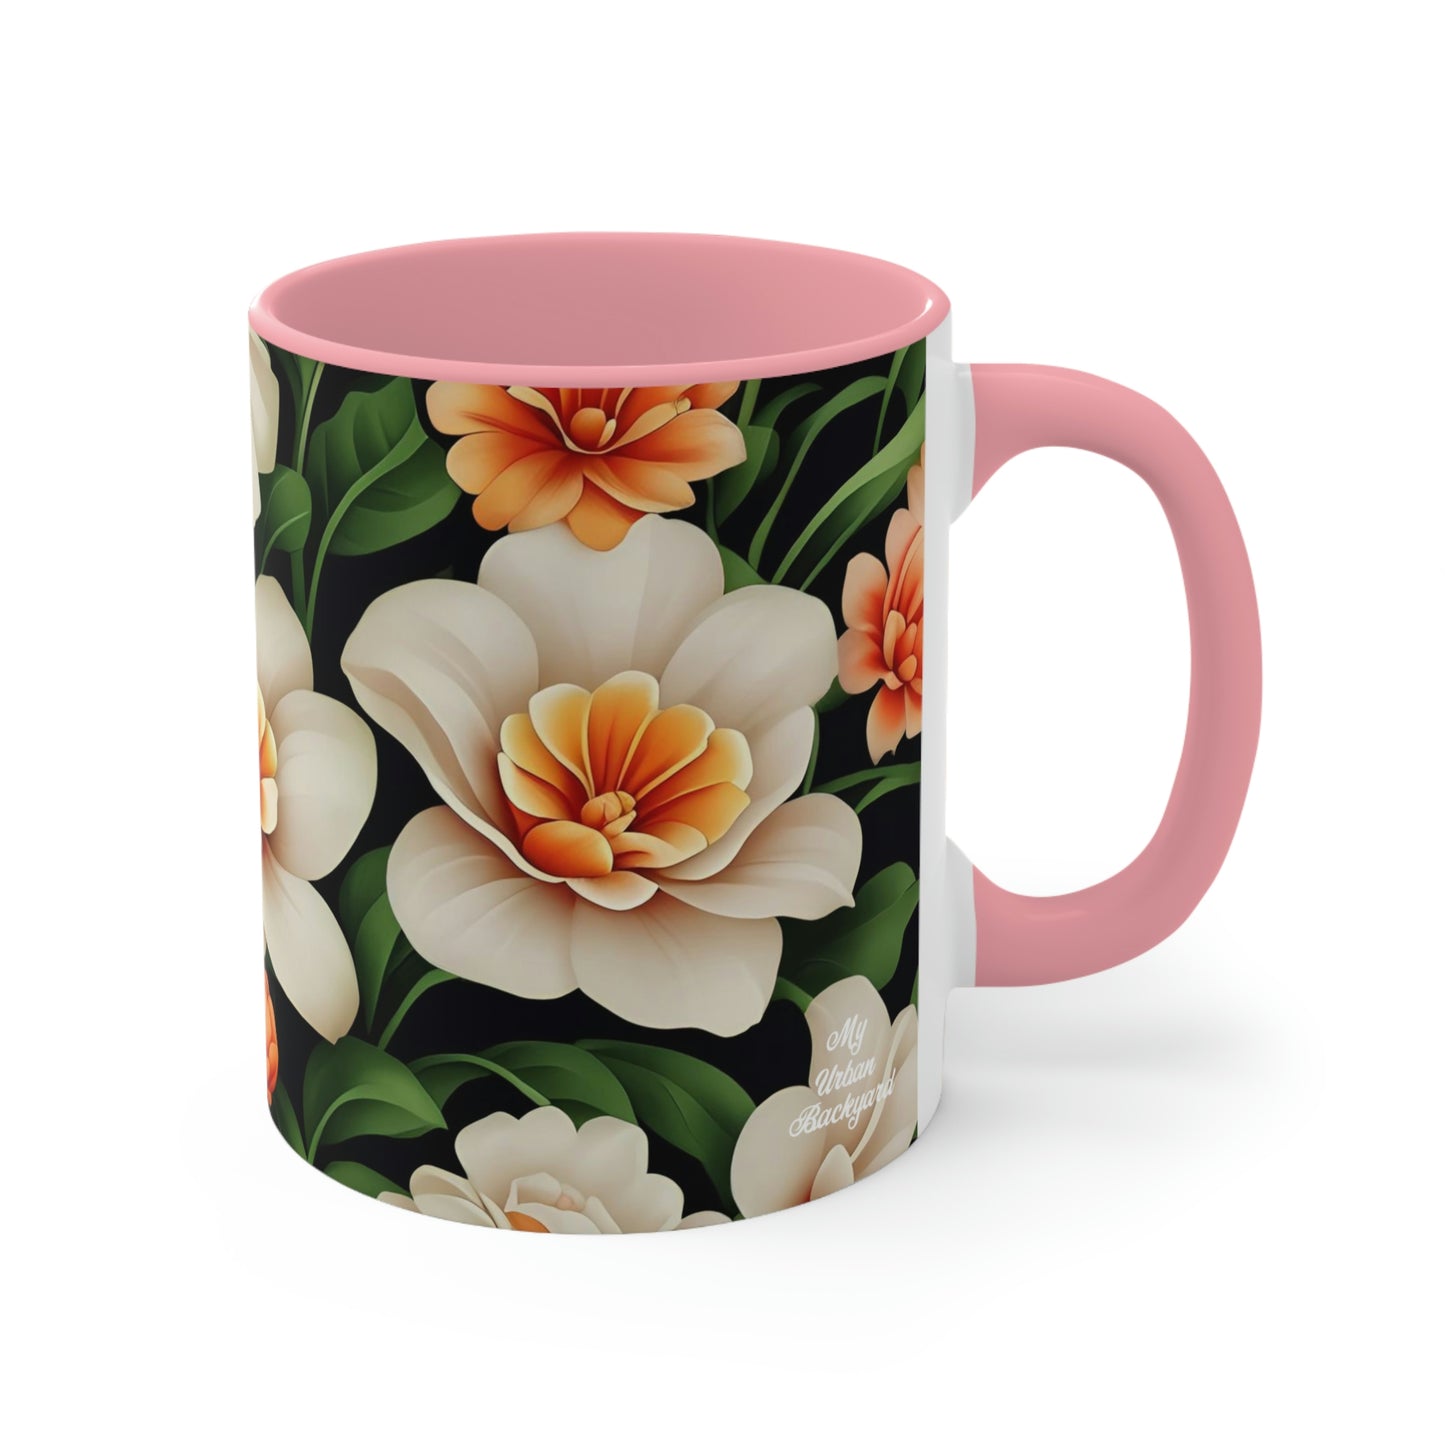 White Flowers, Ceramic Mug - Perfect for Coffee, Tea, and More!